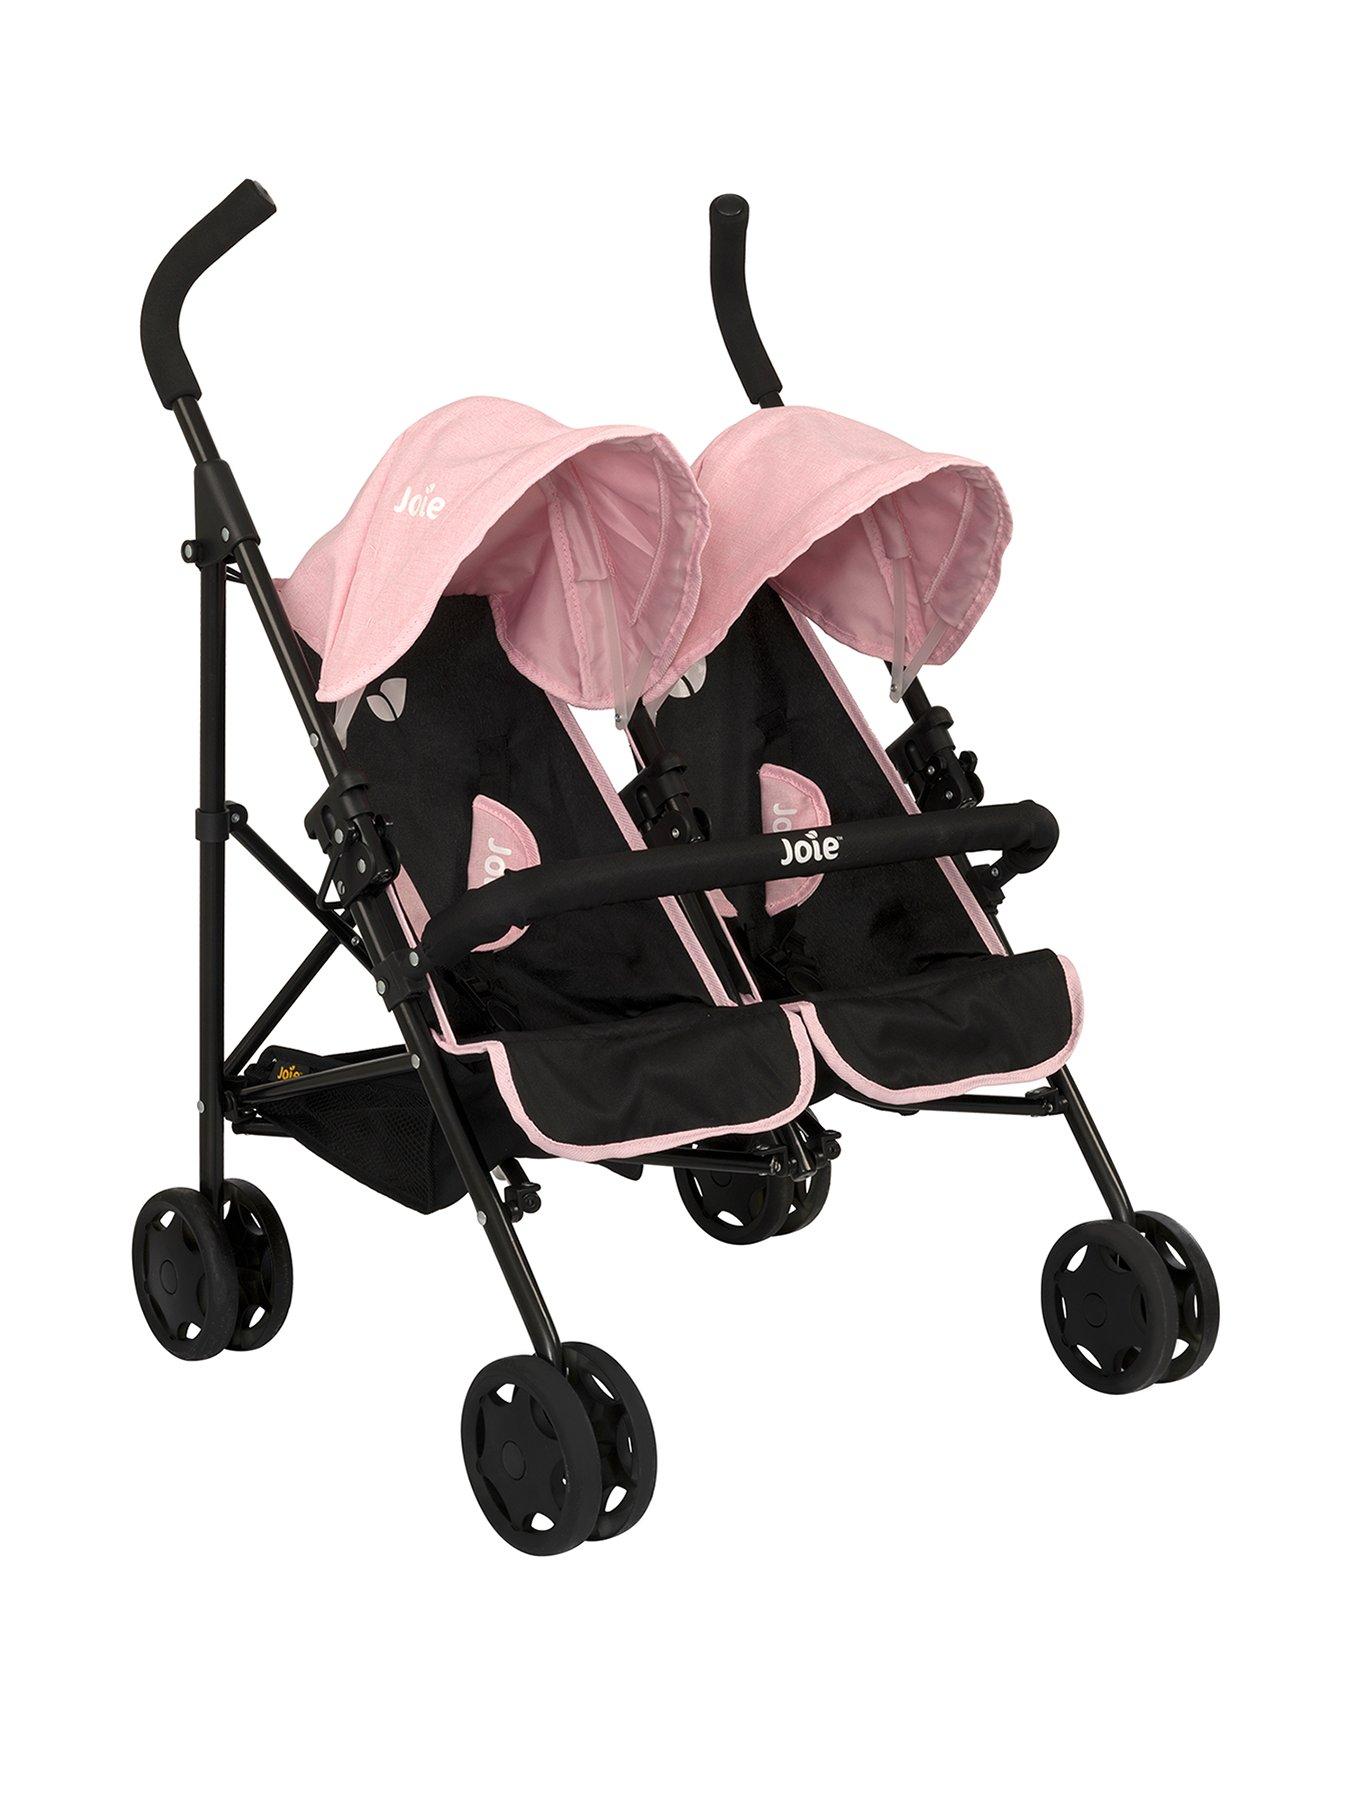 malibu unicorn twin stroller